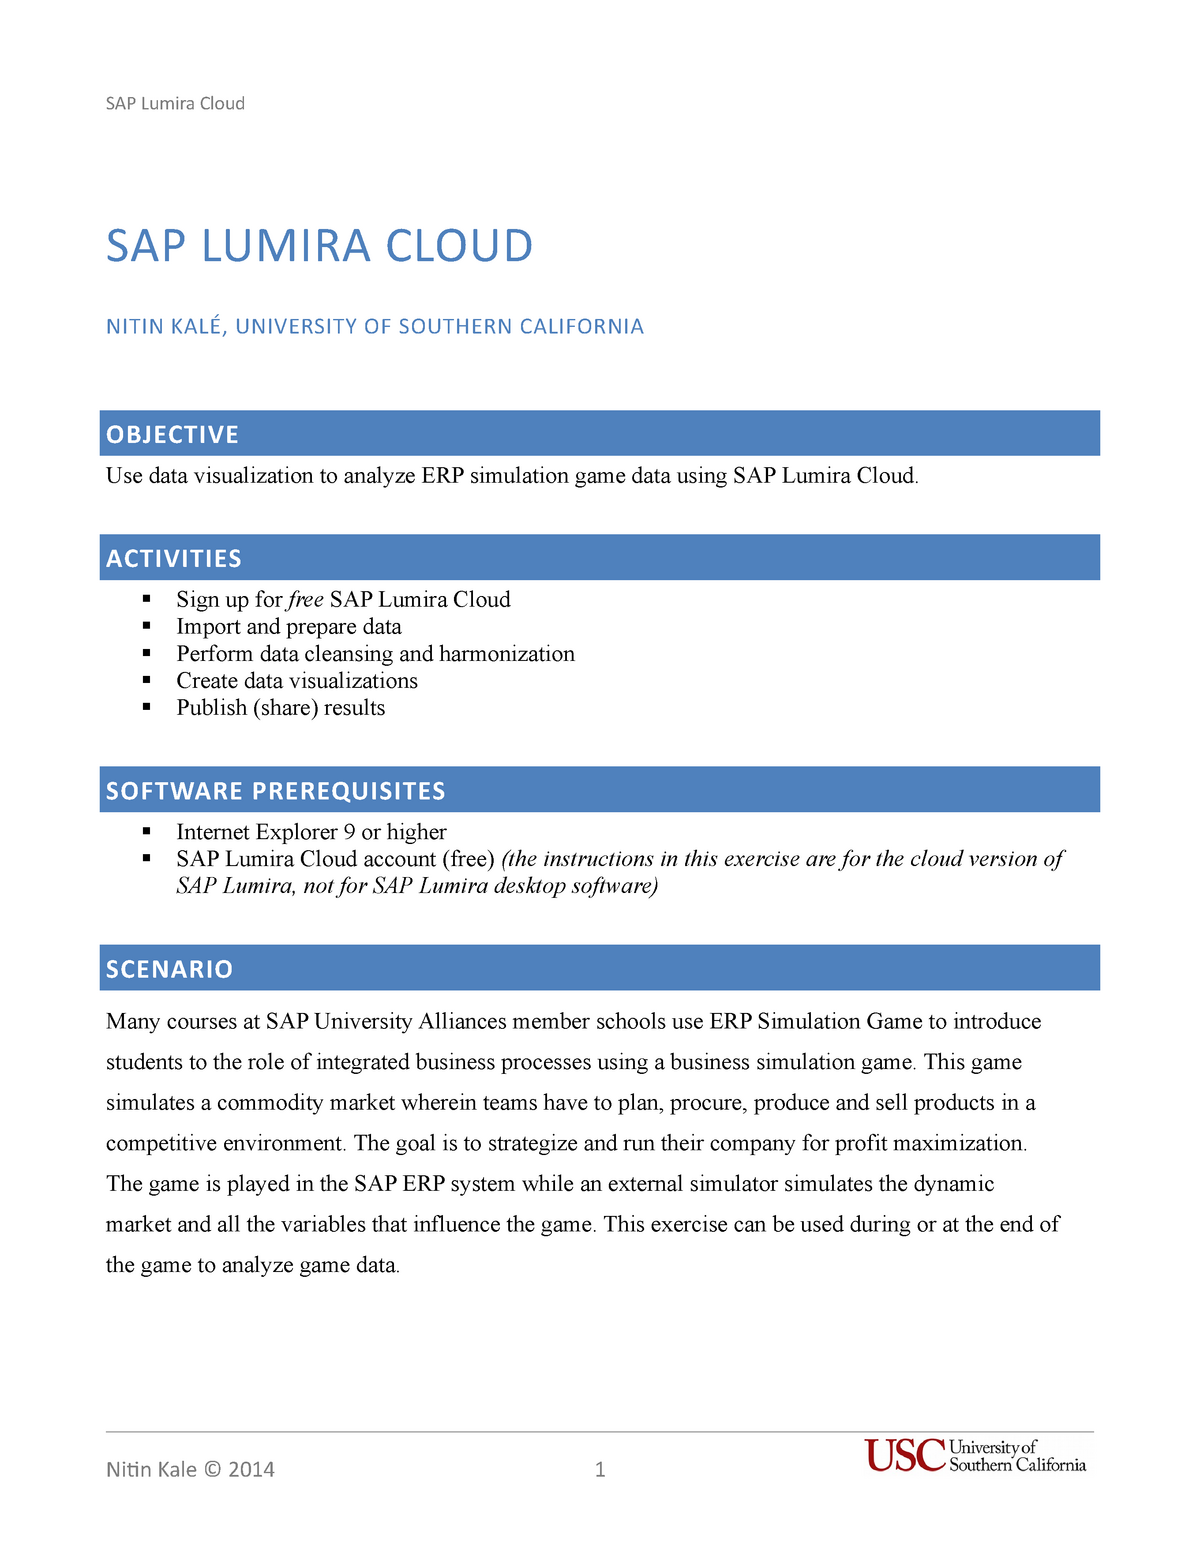 different versions of sap lumira desktop